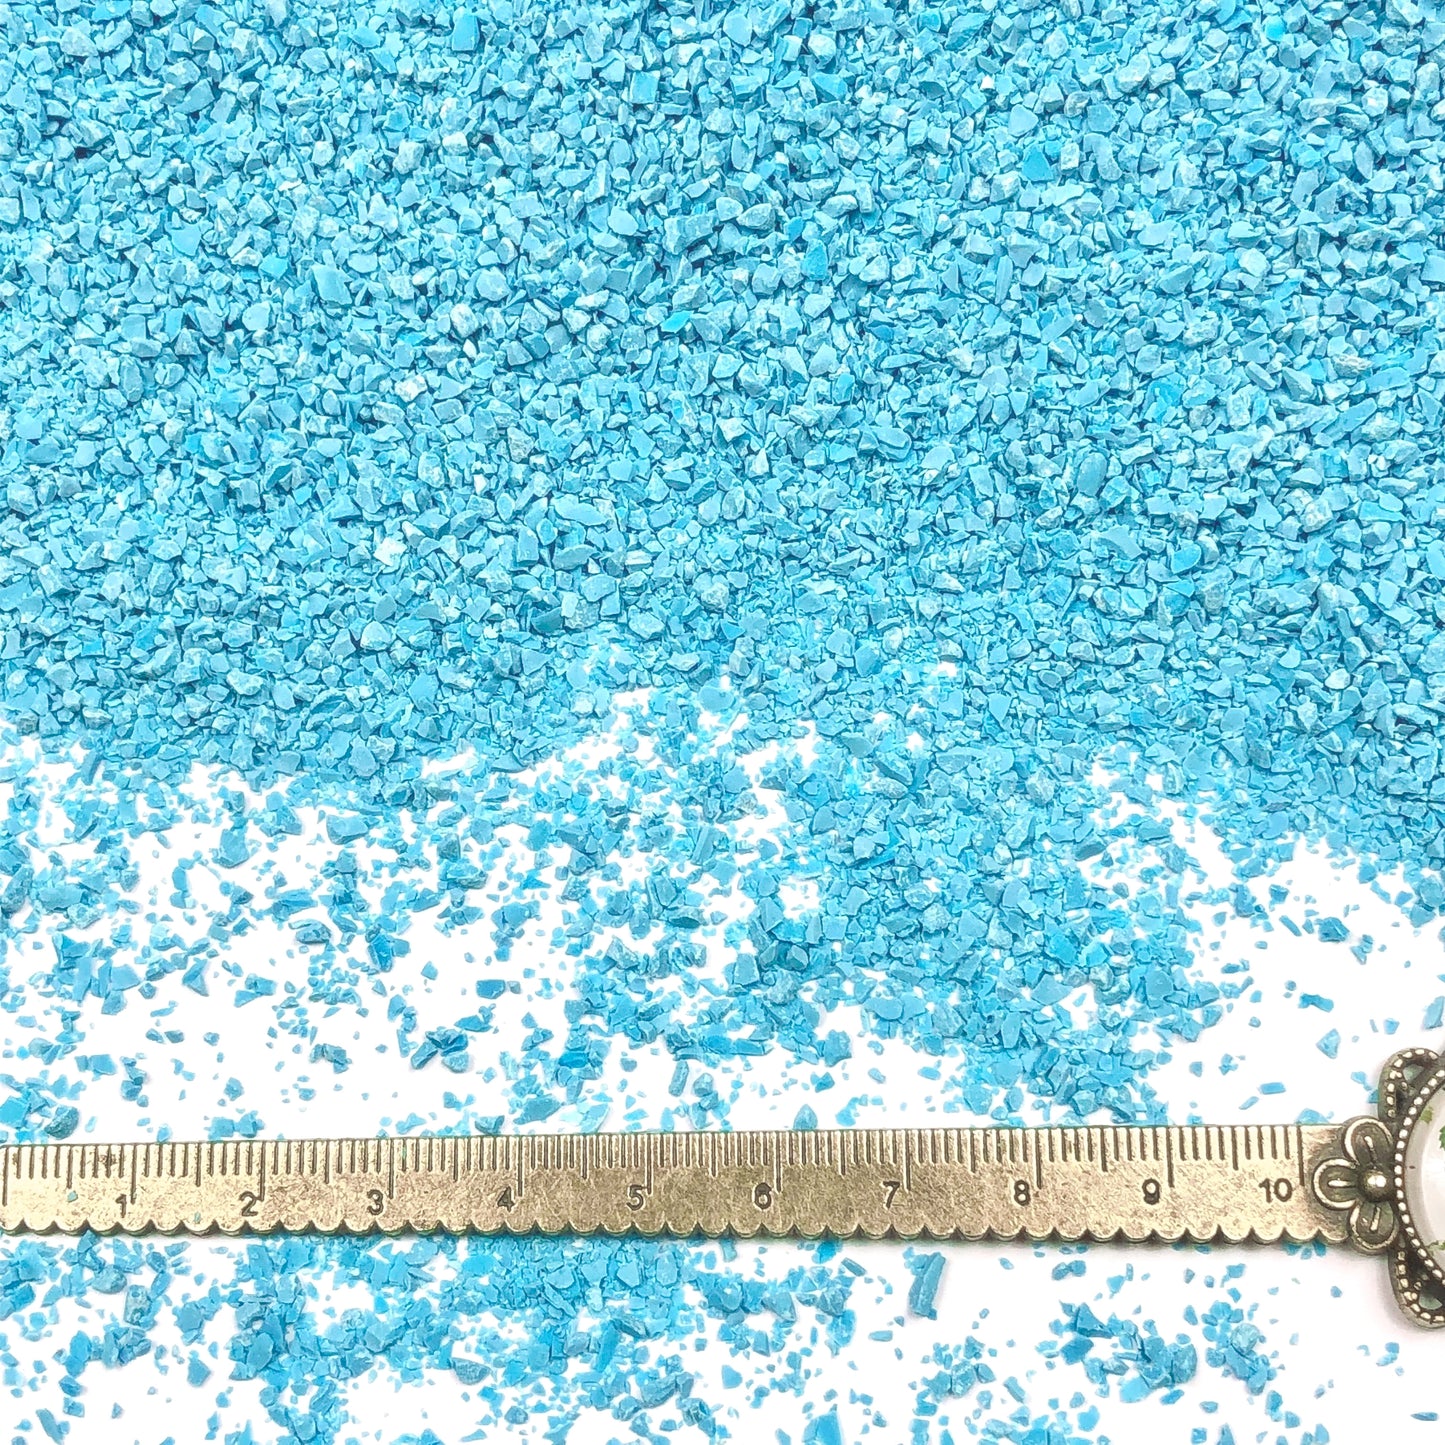 Crushed Blue Turquoise (Lab-Created), Medium Crush, Sand Size, 2mm - 0.25mm